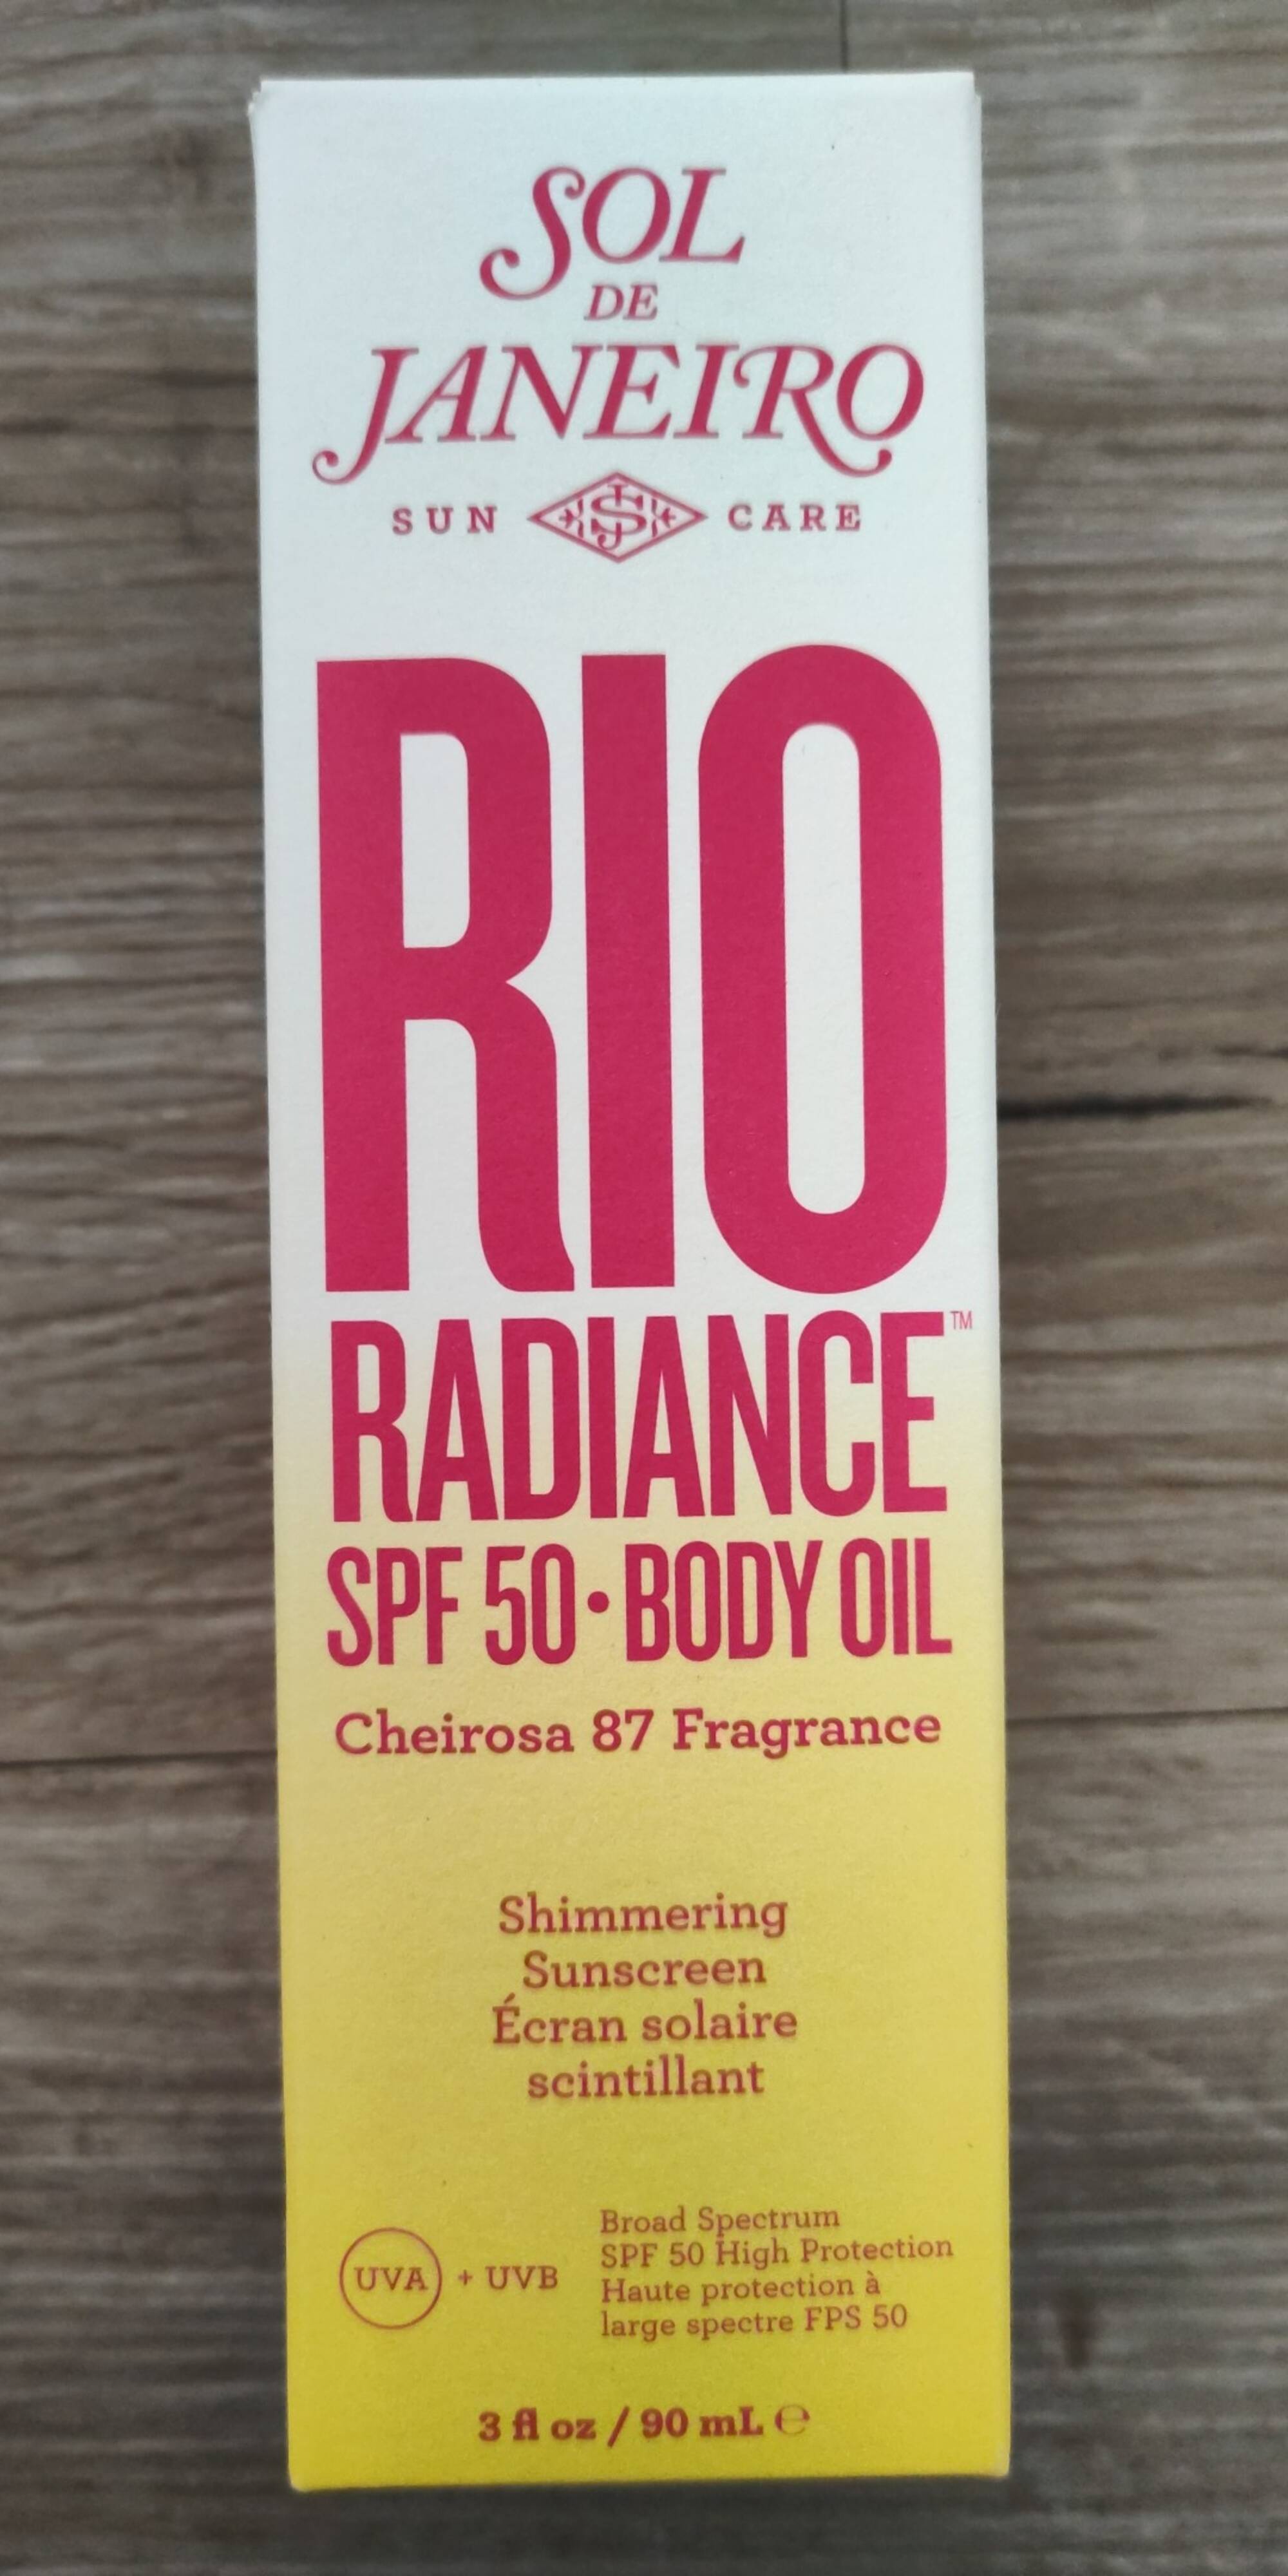 SOL DE JANEIRO - Rio radiance - Body oil  SPF 50